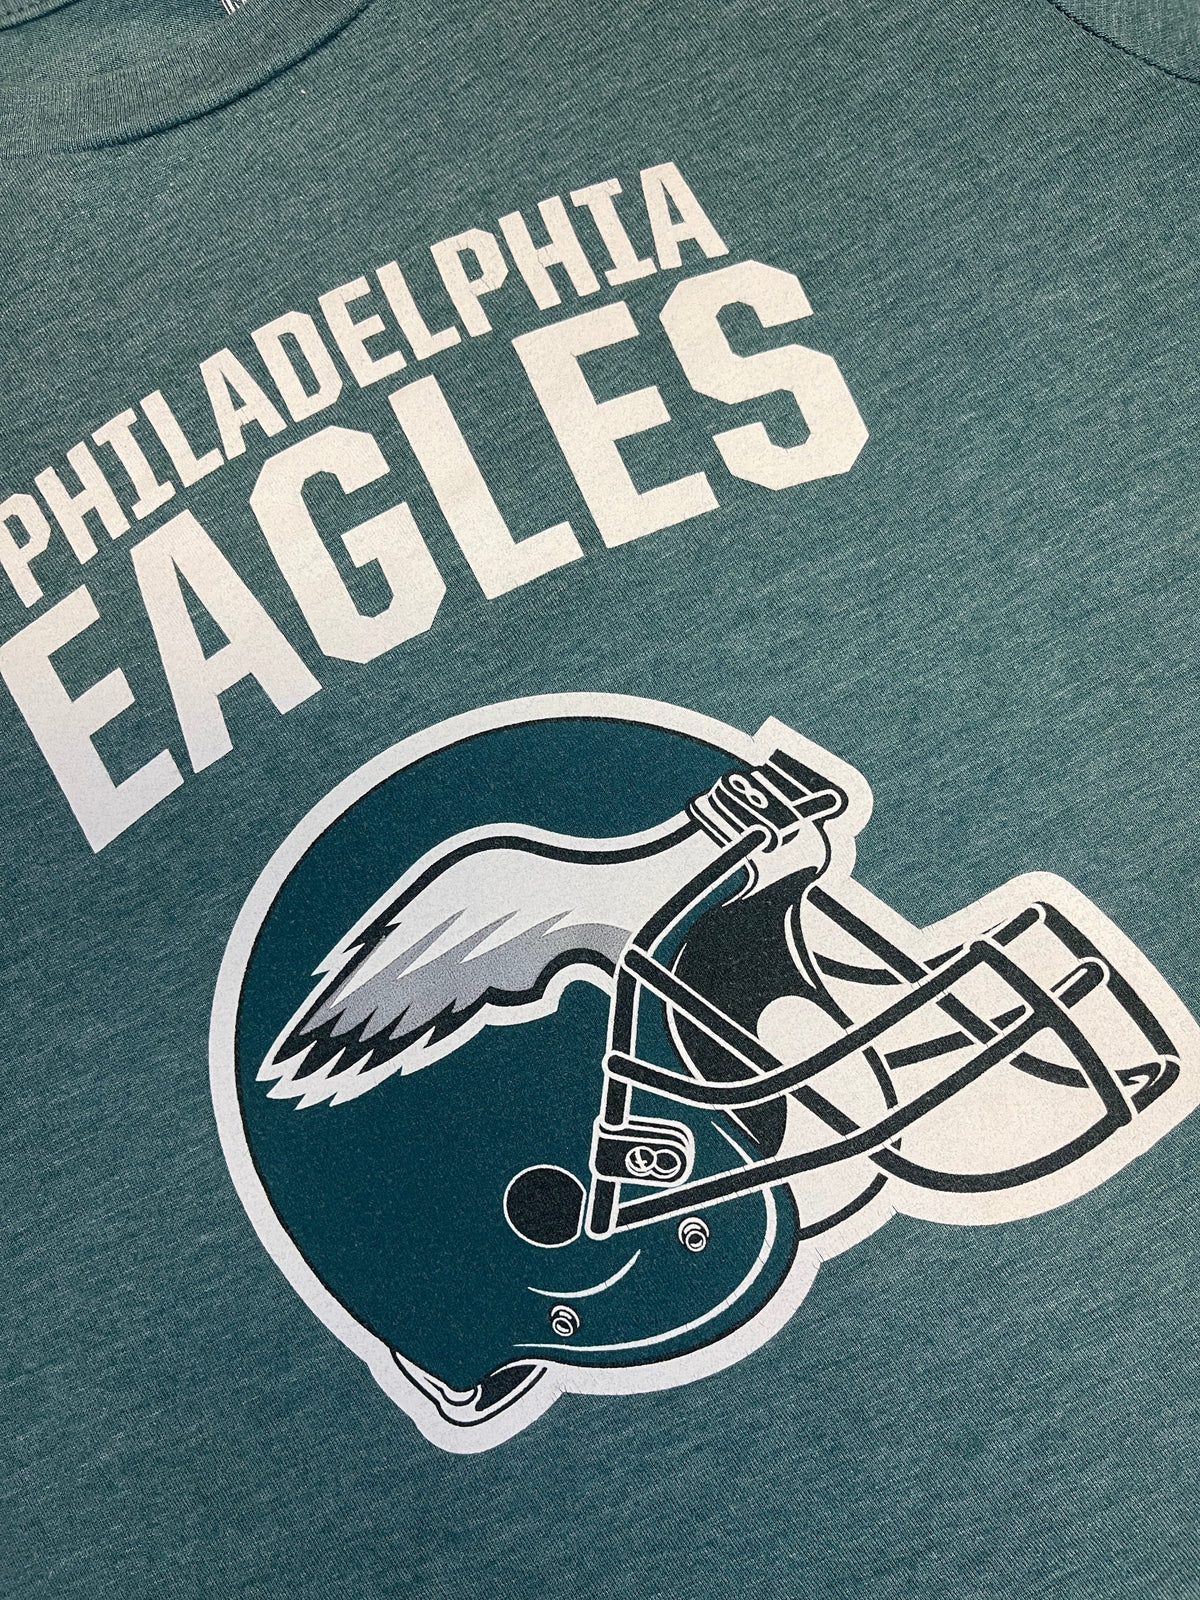 NFL Philadelphia Eagles Helmet T-Shirt Youth Small 6-7